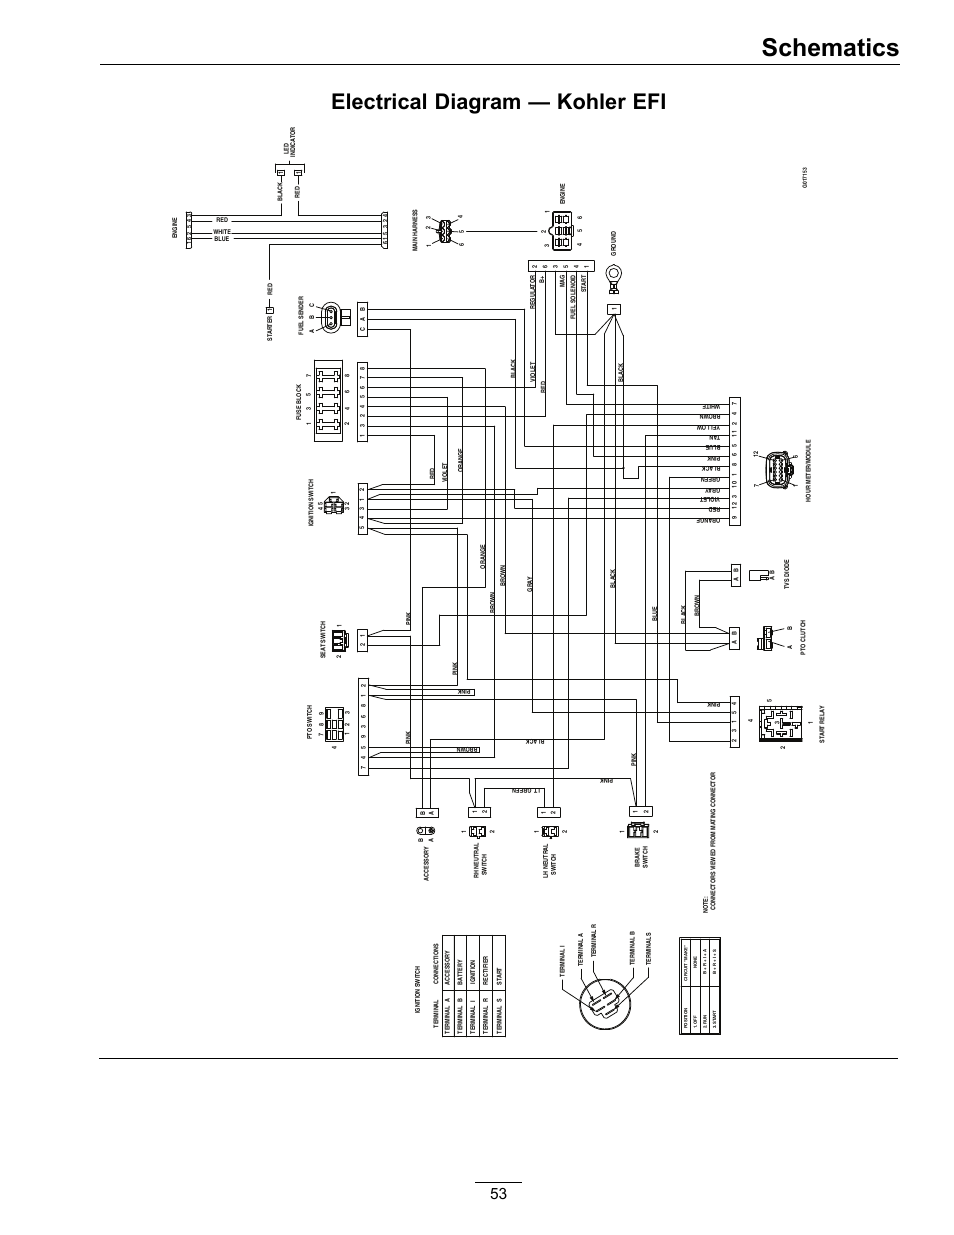 Schematics, Electrical diagram — kohler efi | Exmark Lazer Z S-Series User Manual | Page 53 / 60